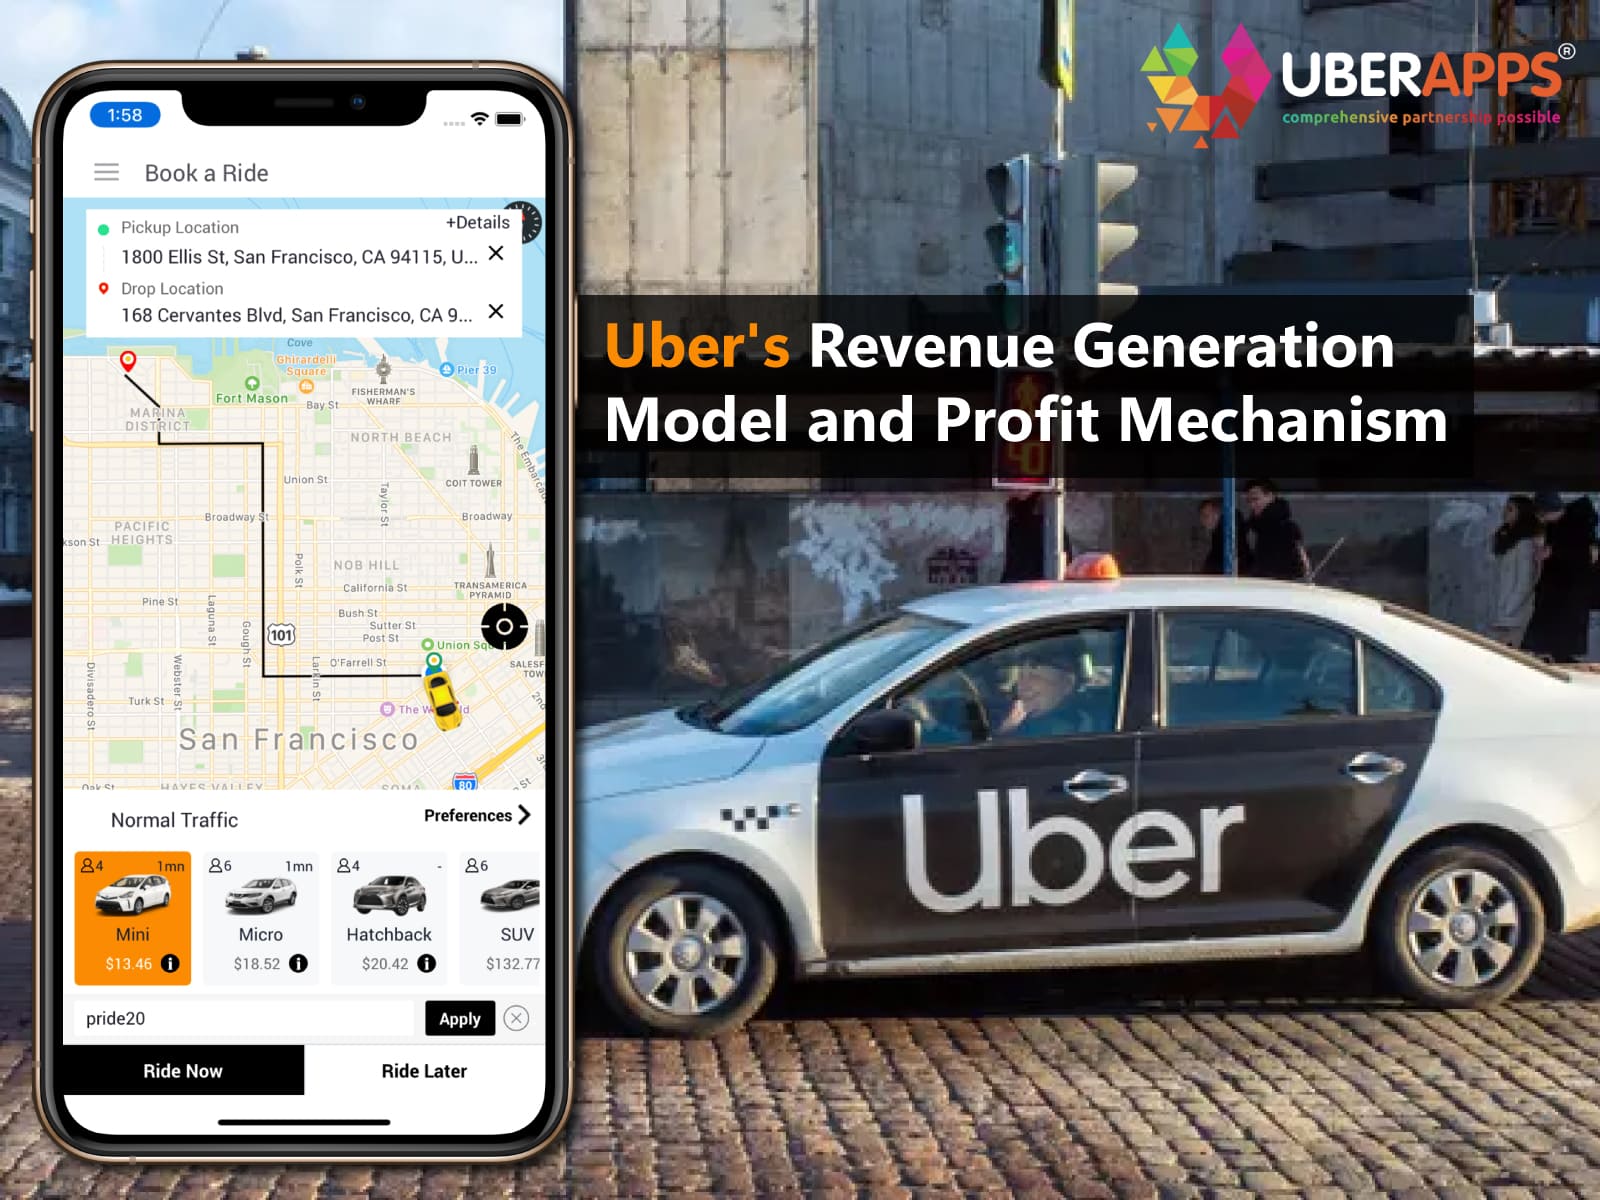 Uber's Revenue Generation Model and Profit Mechanism